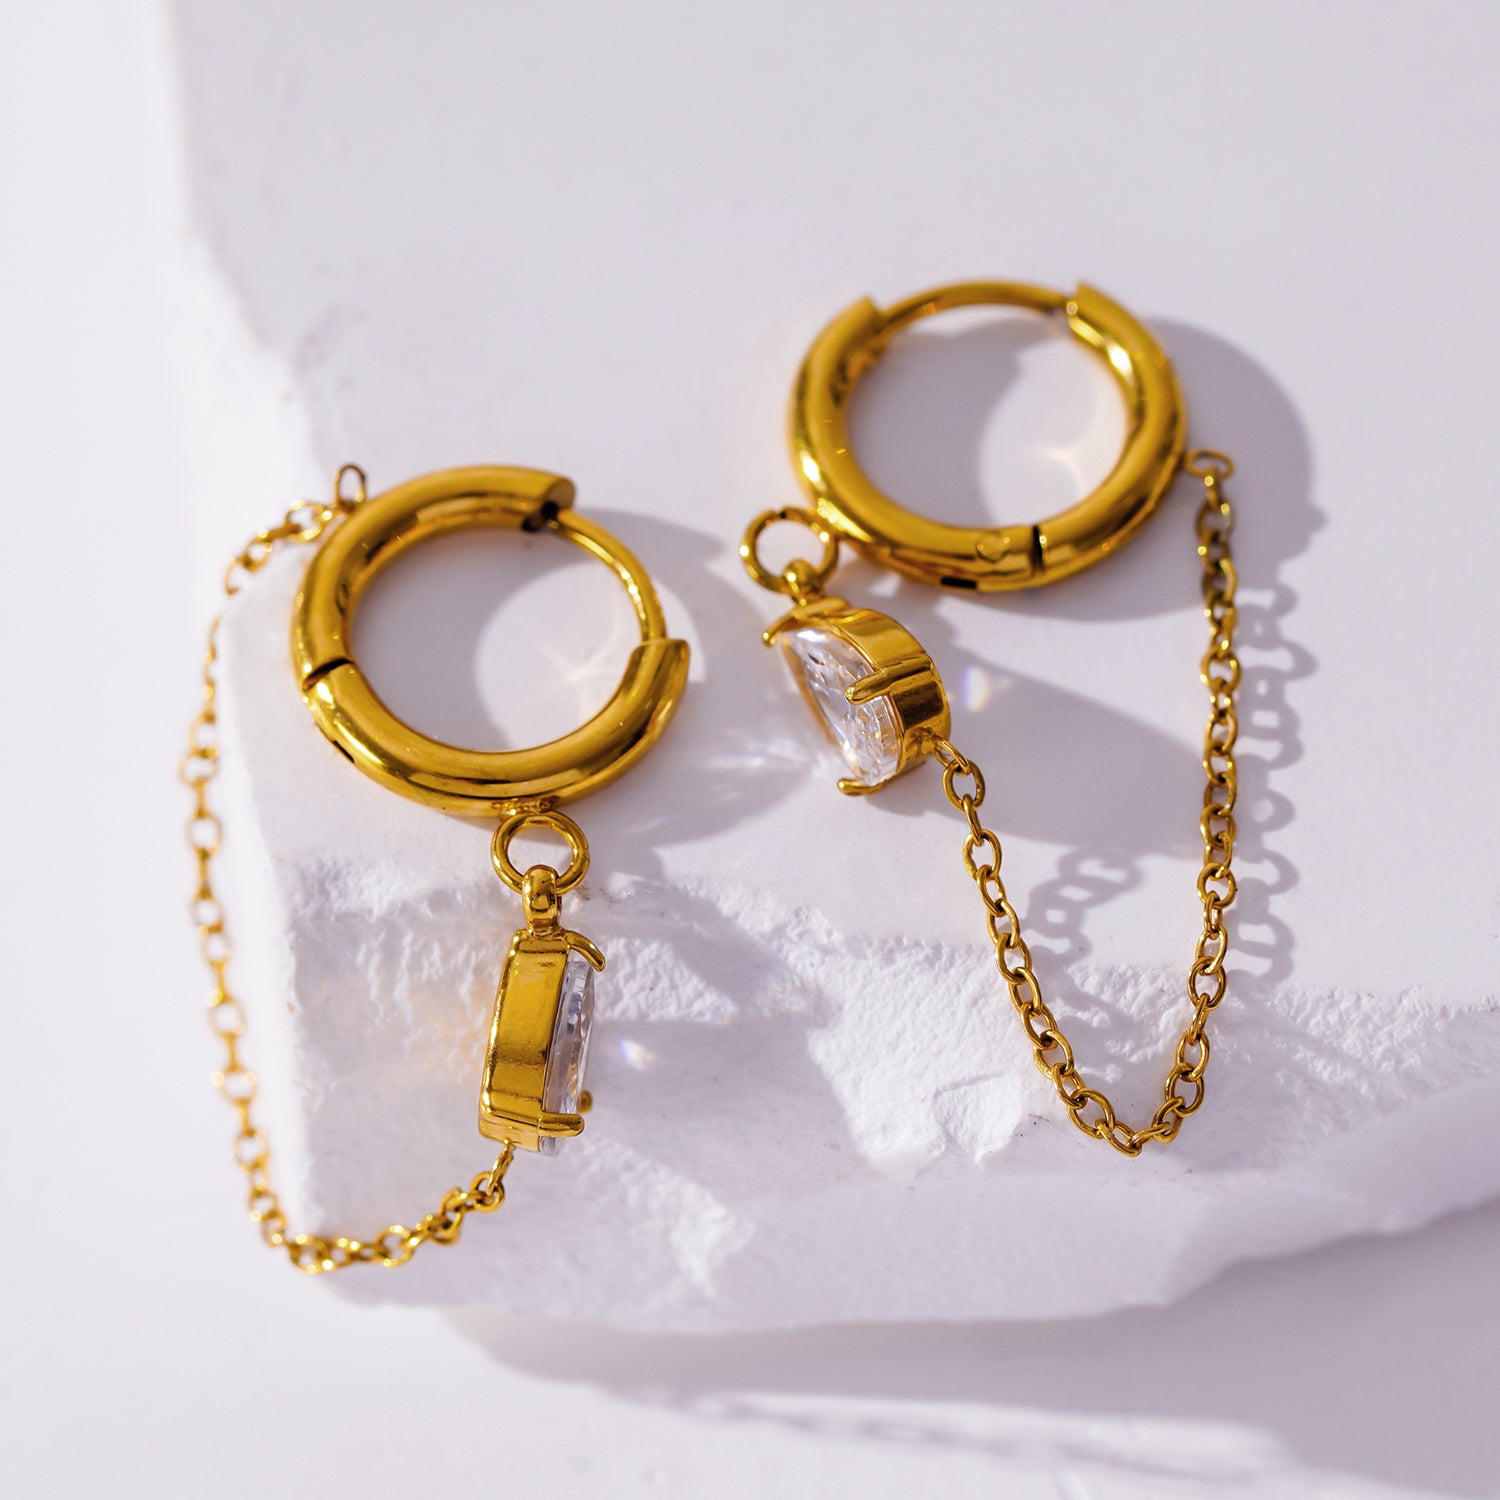 Style KAZUKA 8726: Hoop Earrings with Pear-Shaped Zirconia Charm and Dainty Chain.